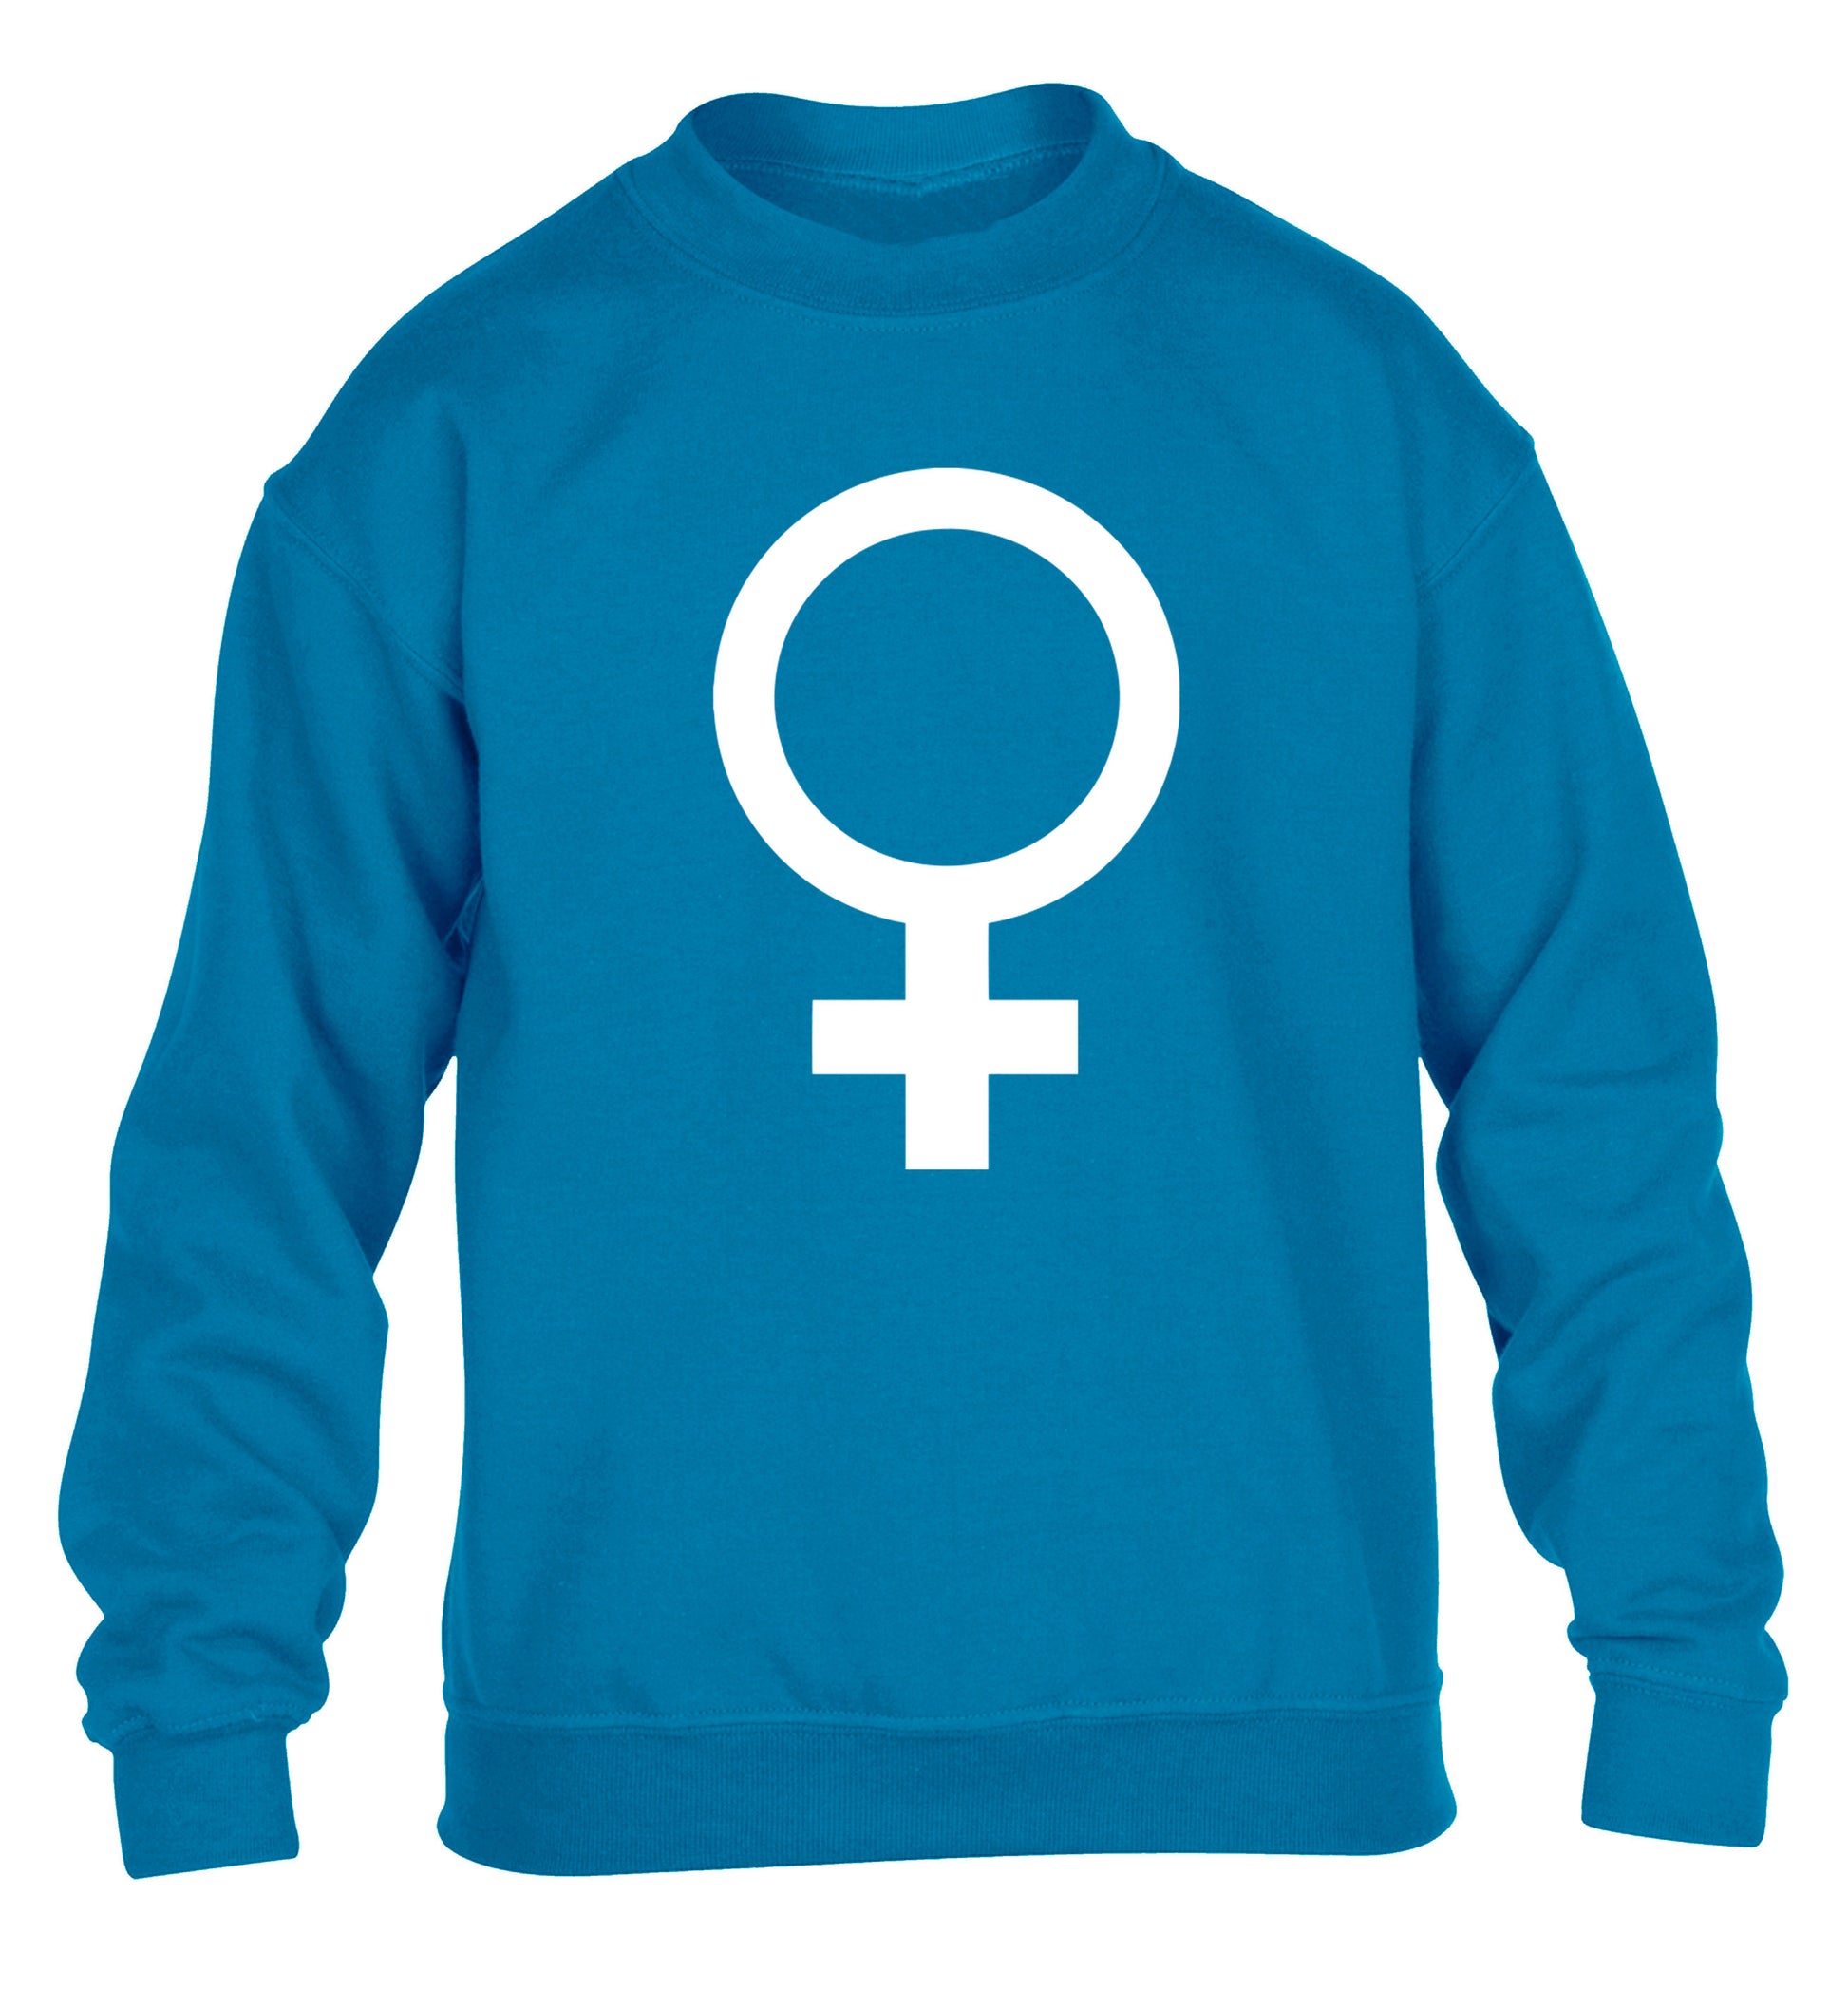 Female symbol large children's blue sweater 12-14 Years